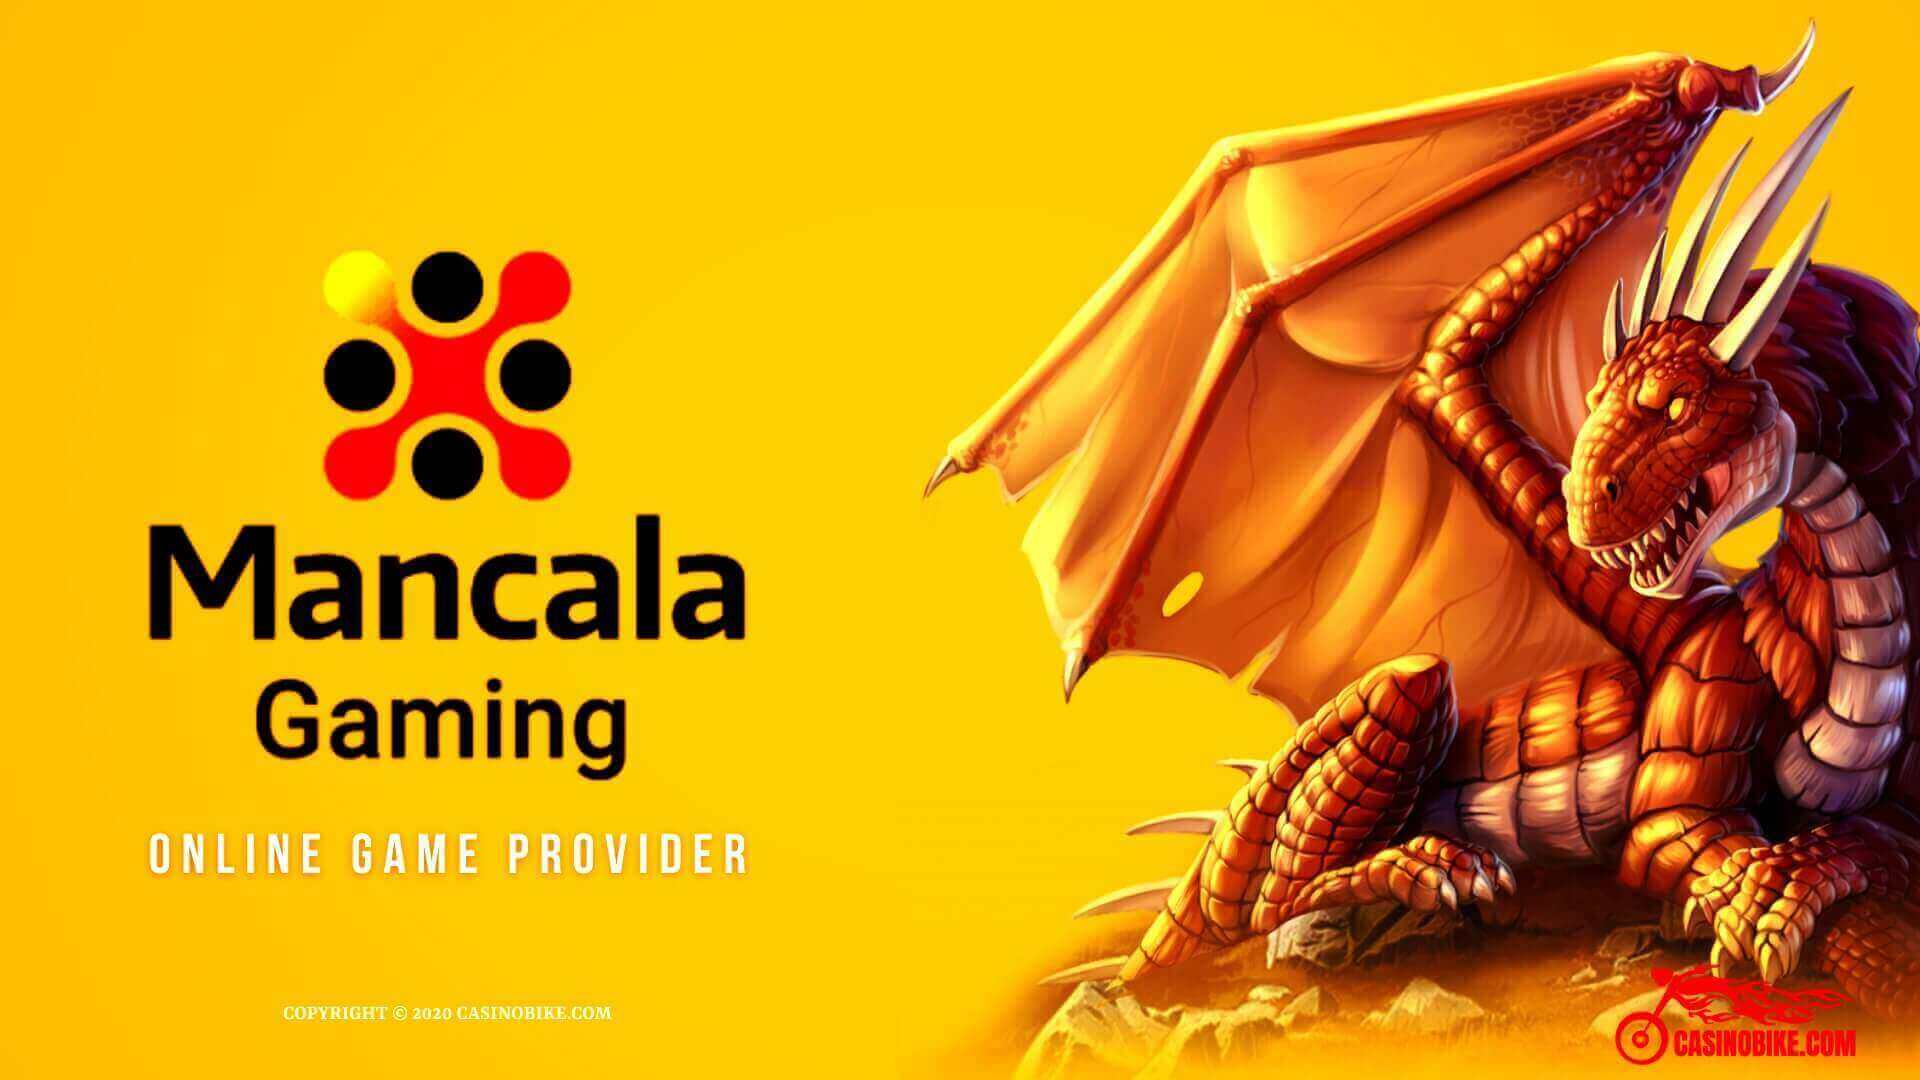 Mancala Gaming Online Slot Game Provider